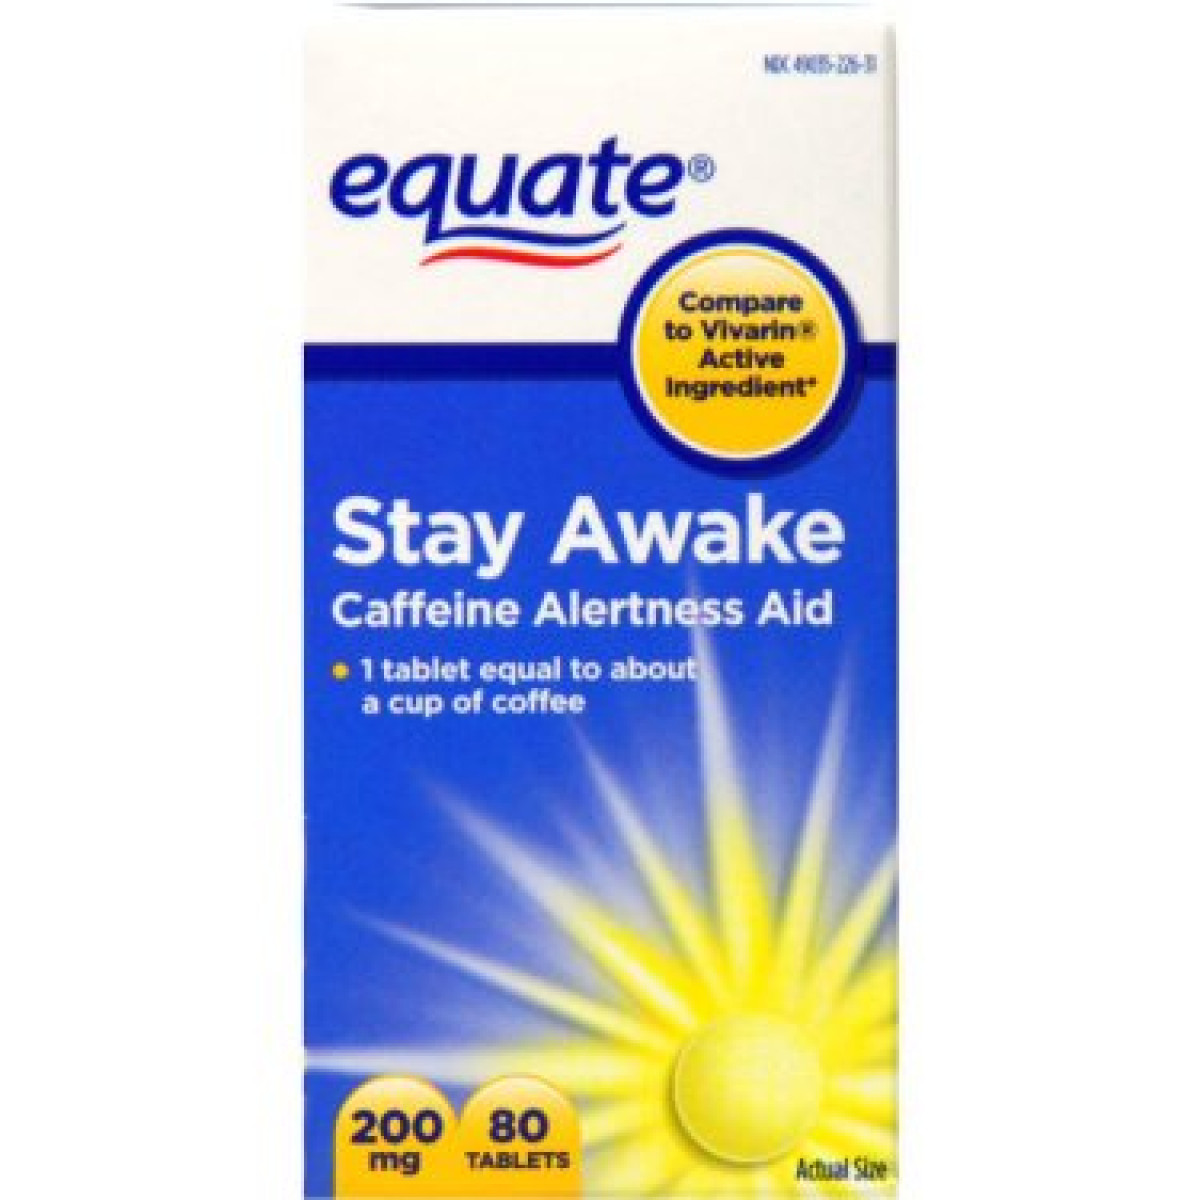 equate stay awake ingredients